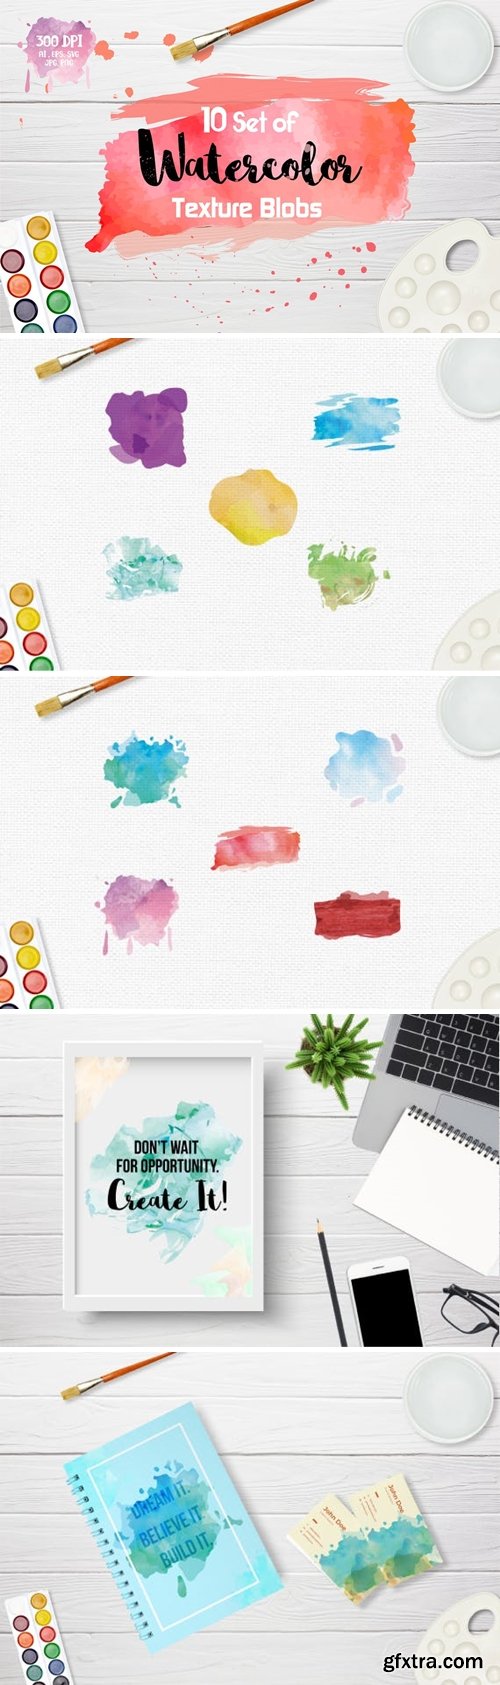 Watercolor Texture Blobs